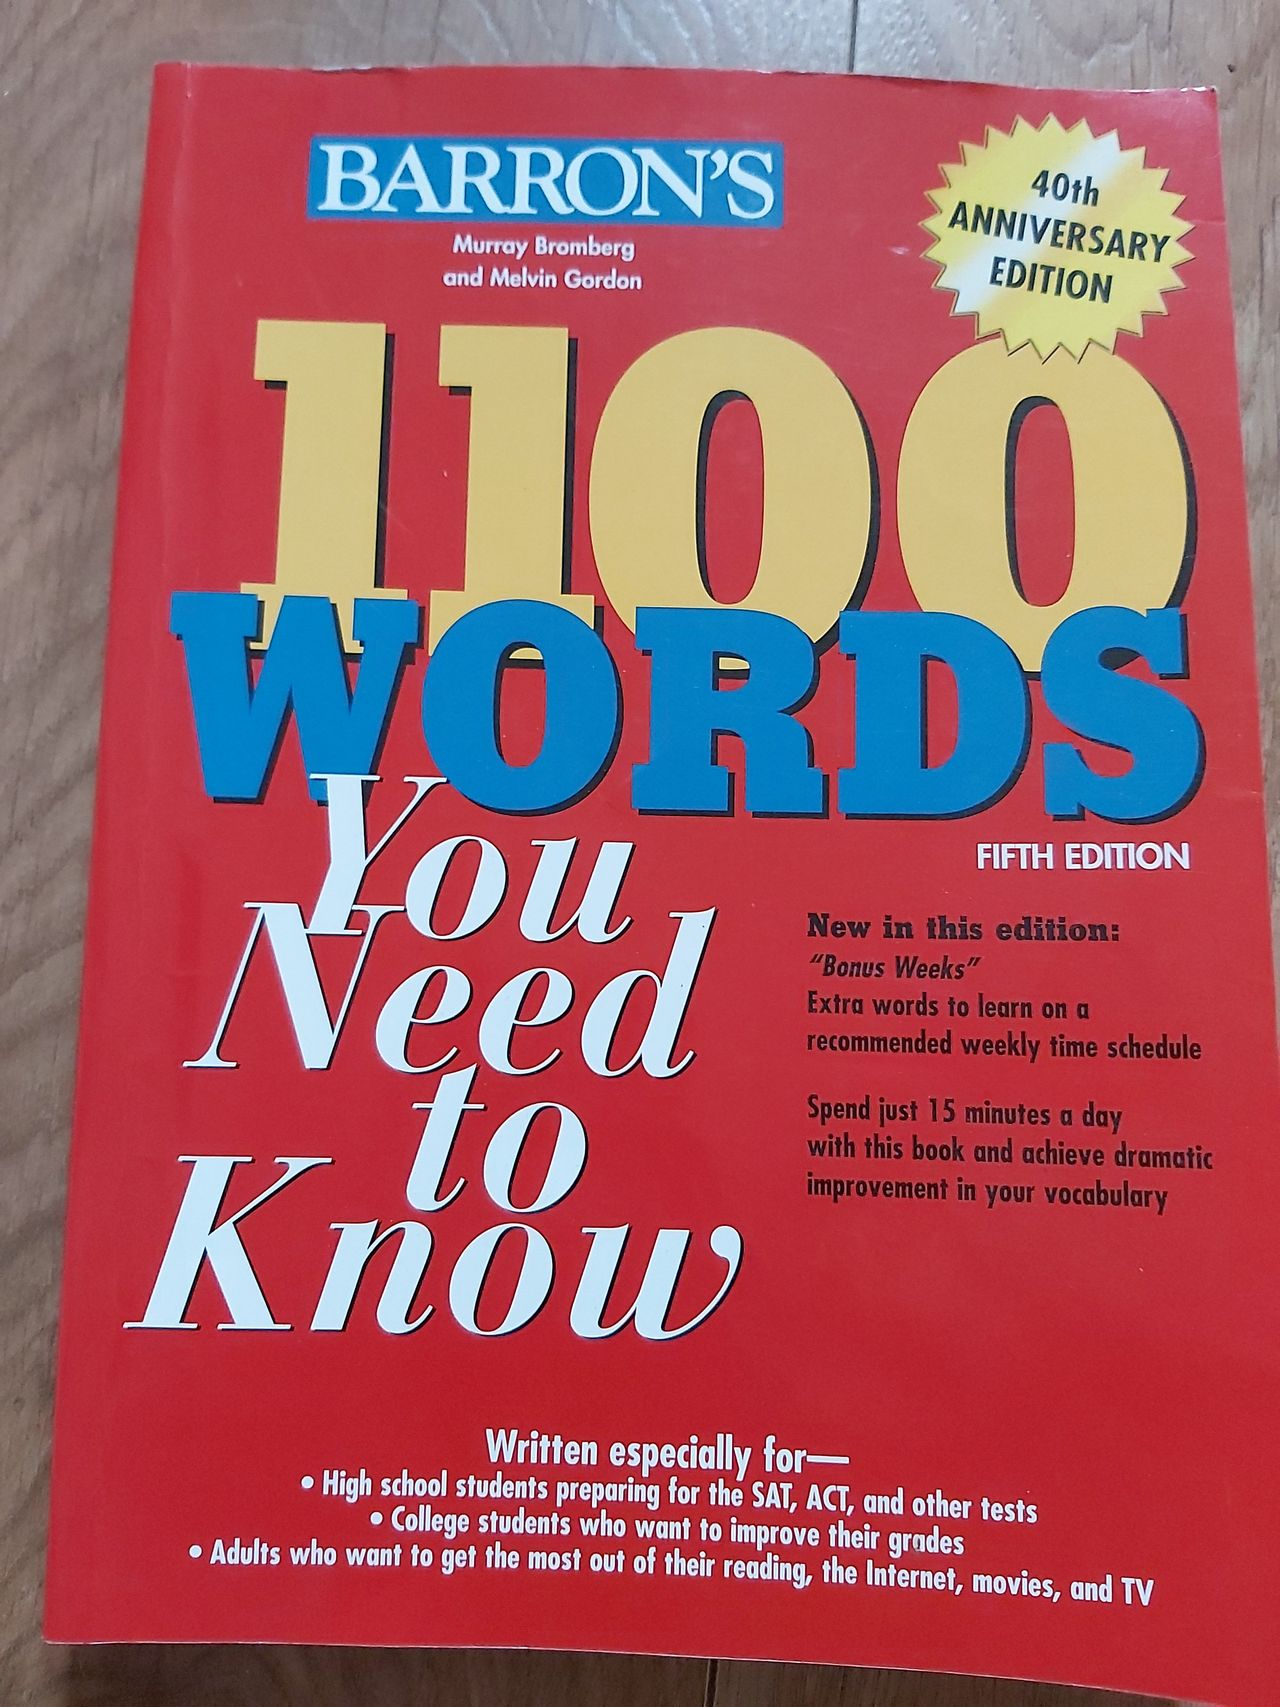 1100 in Words - Write 1100 in Words